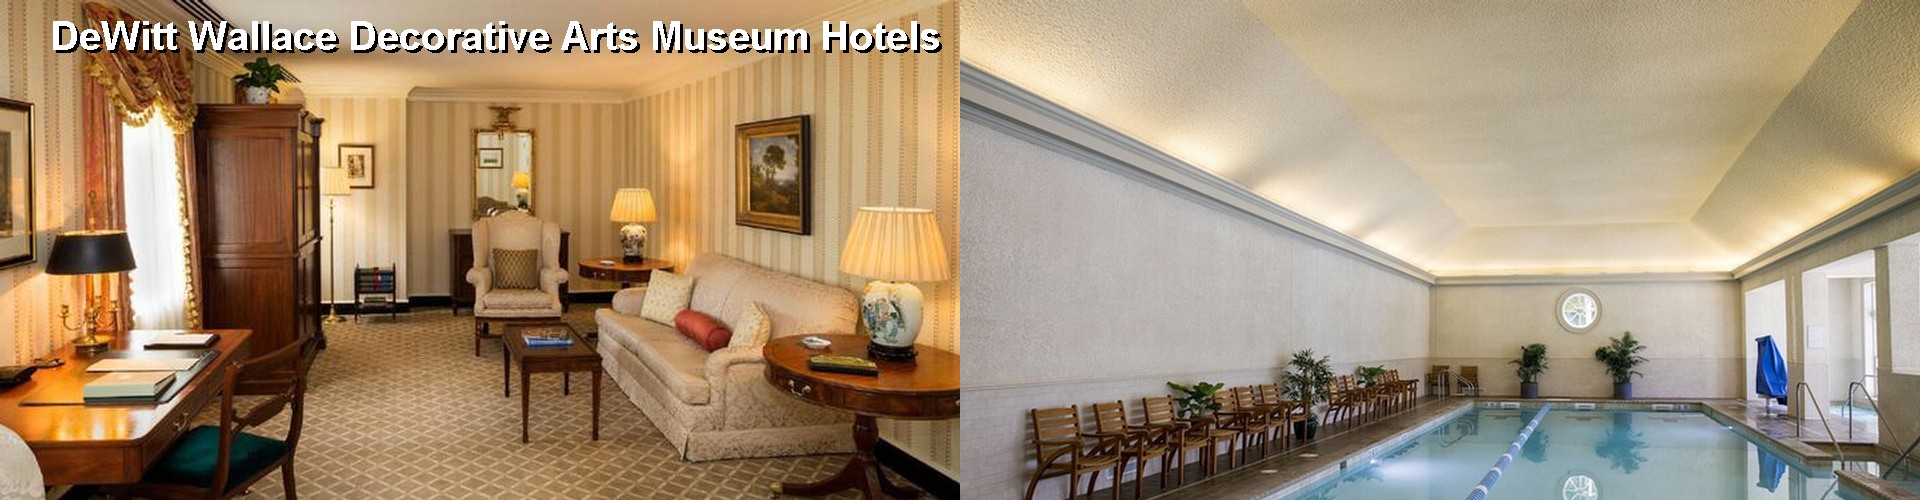 5 Best Hotels near DeWitt Wallace Decorative Arts Museum